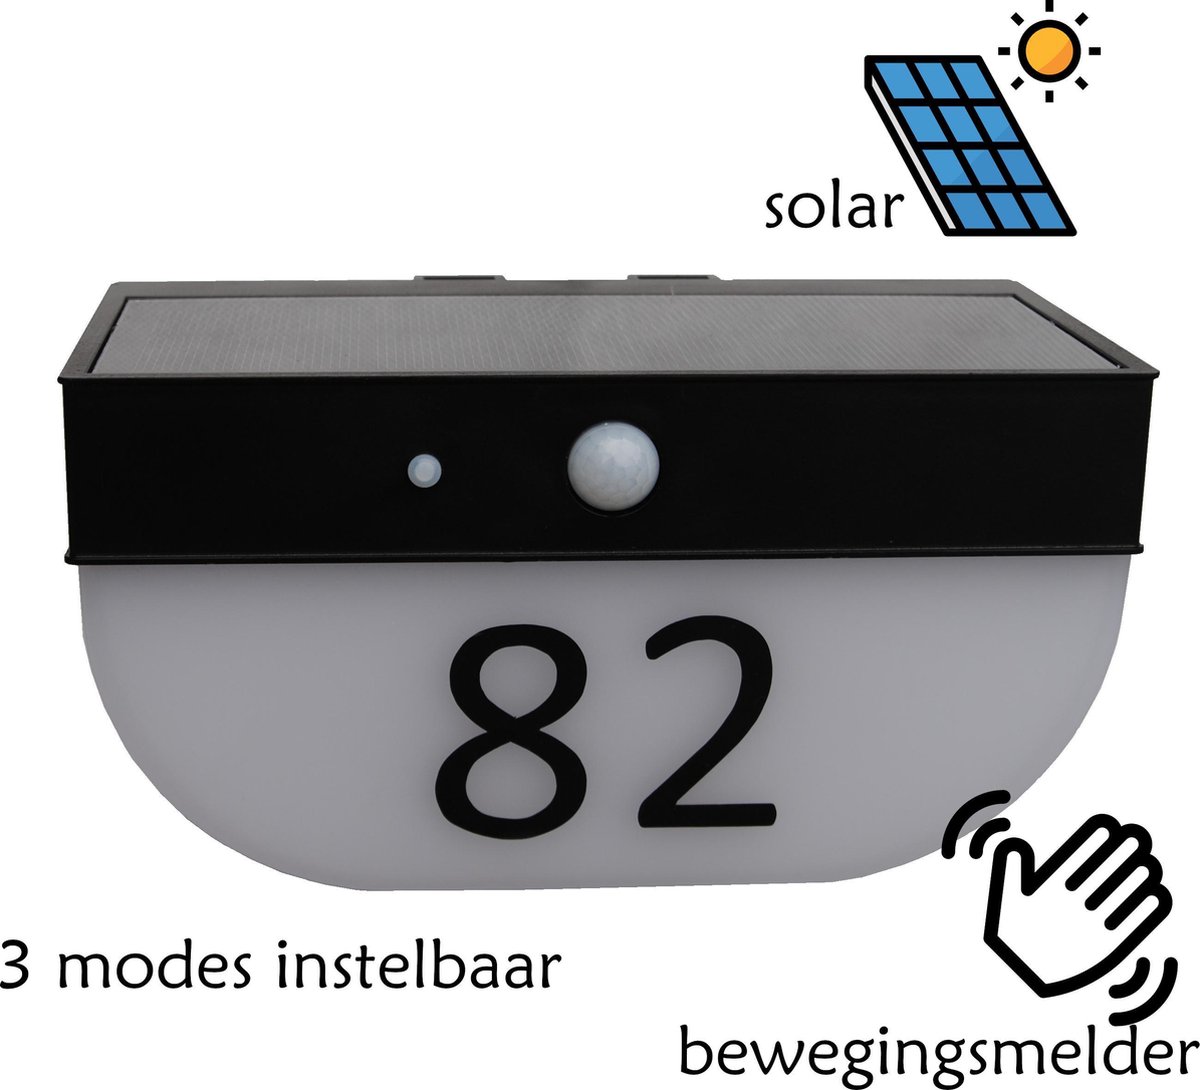 Solar Huisnummer verlichting | bewegingsmelder | 3 modes instelbaar | Li-ion | LED | 300lm | incl. huisnummers | 3000K warm wit